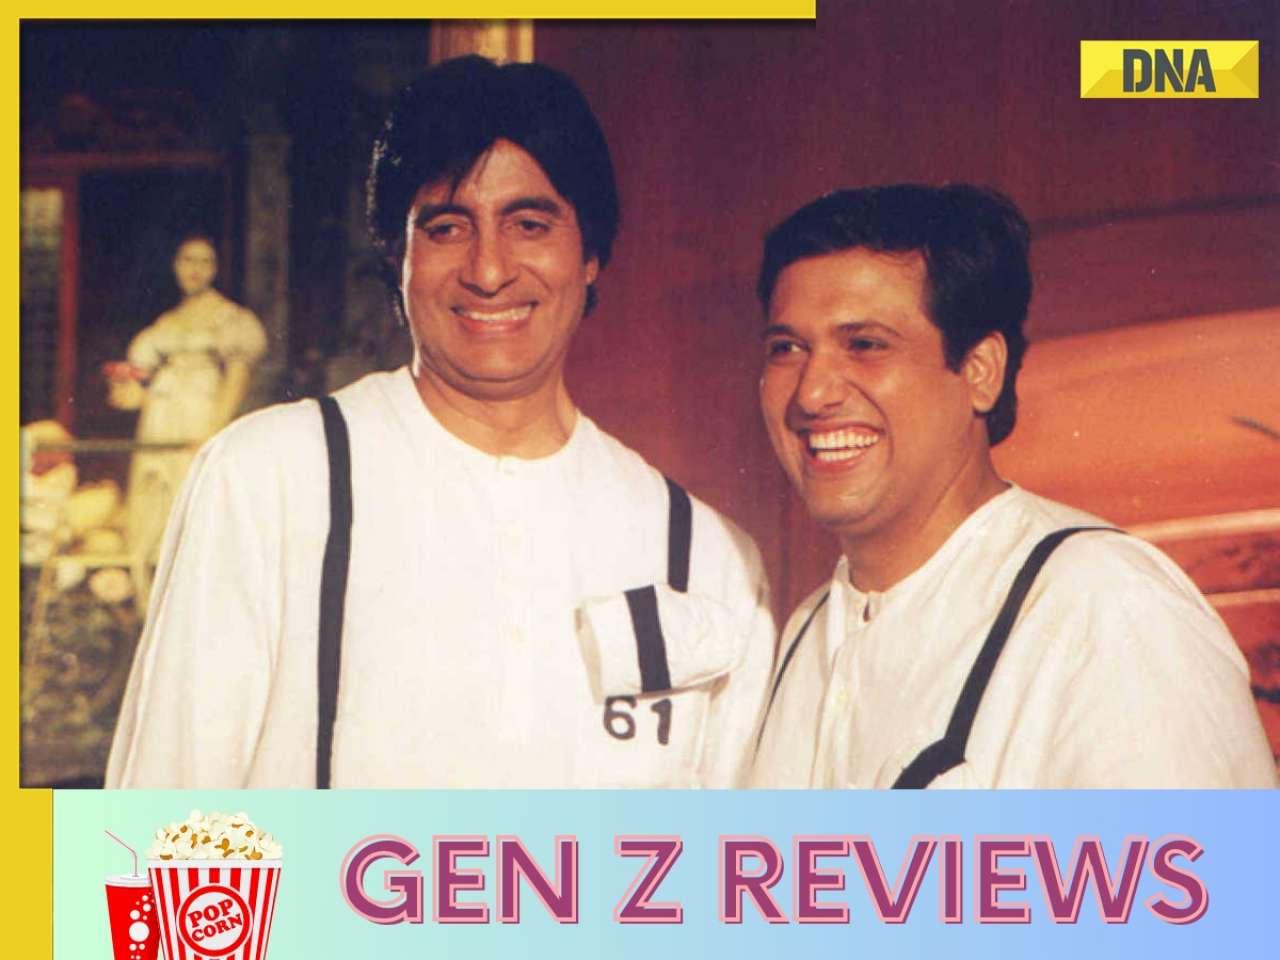 Gen Z reviews OG Bade Miyan Chote Miyan: Amitabh Bachchan, Govinda's bromance, comedy remains timeless and hilarious